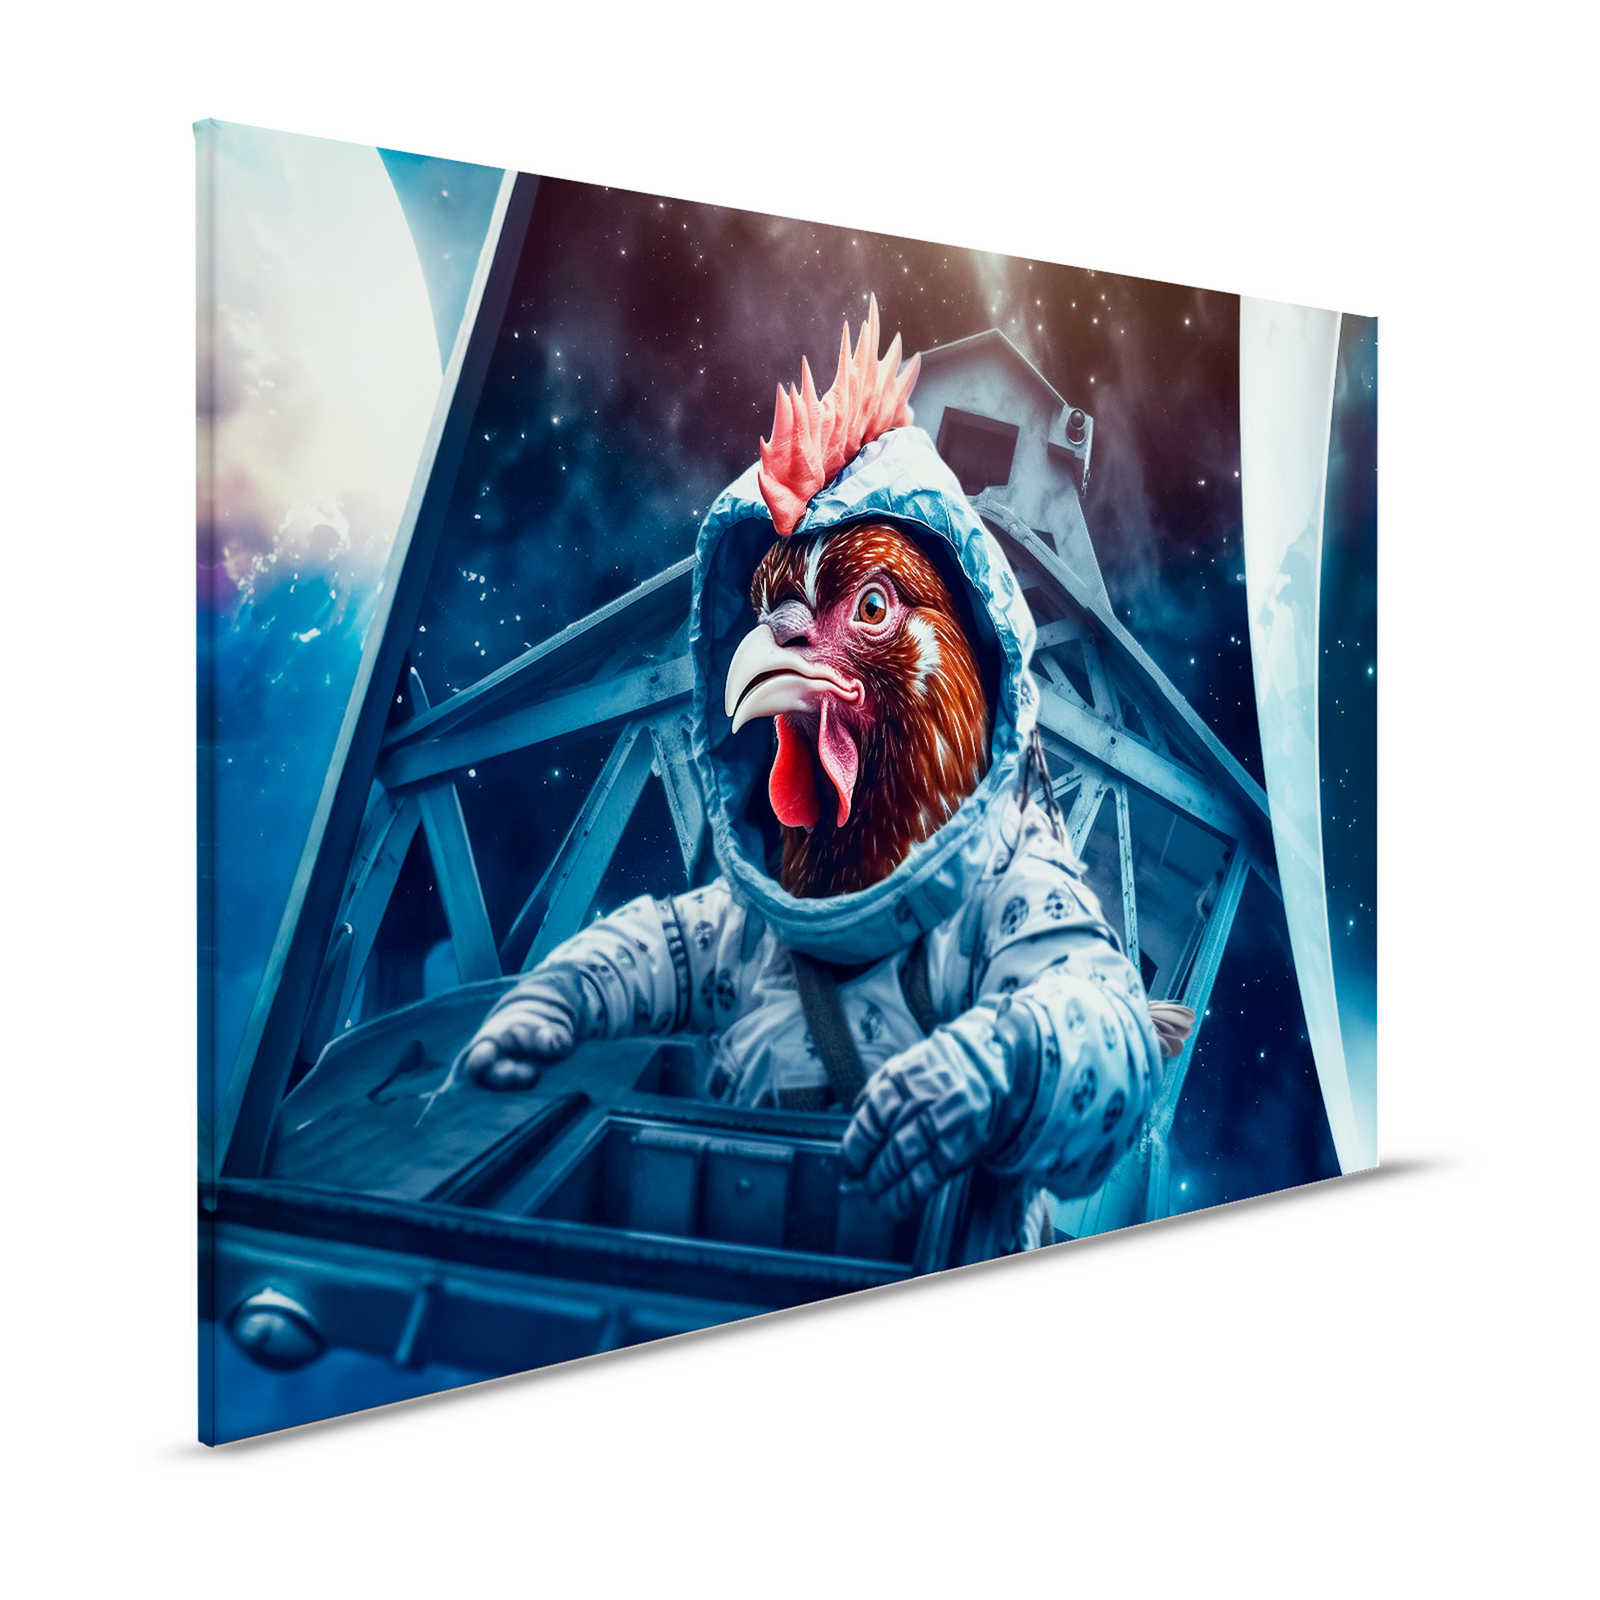 KI Canvas painting »Space Chicken« - 120 cm x 80 cm
